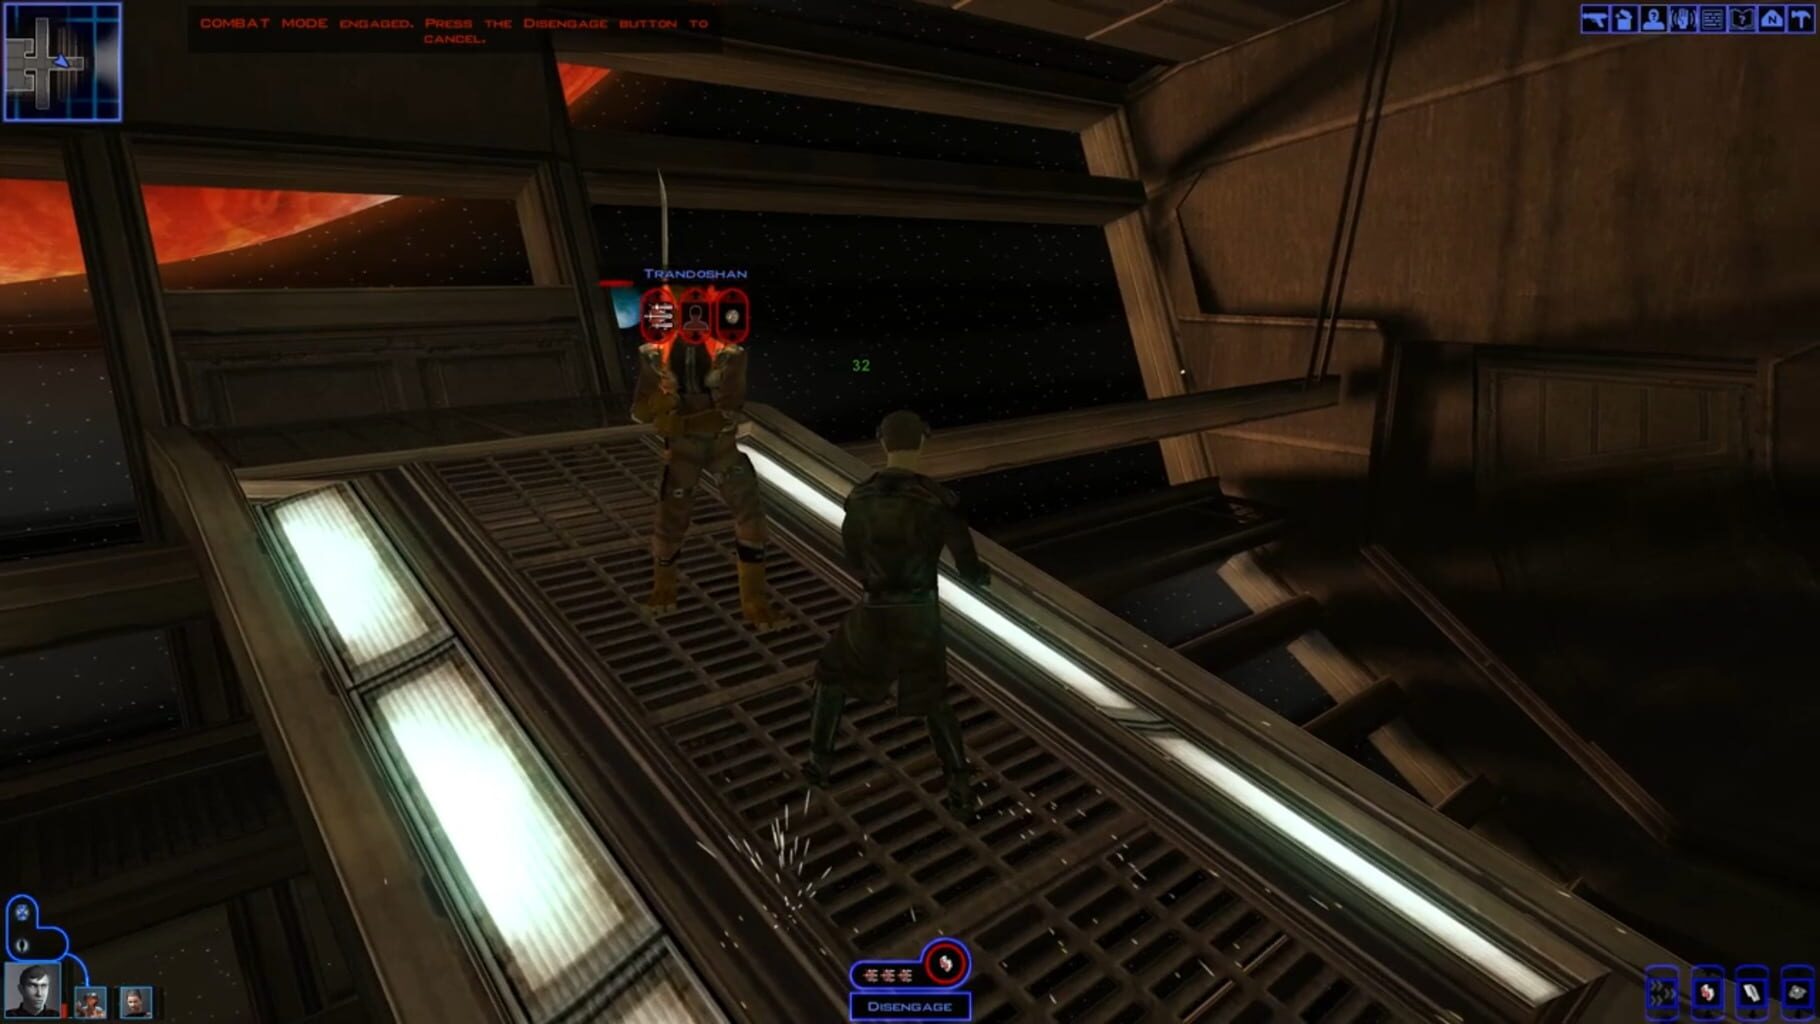 Captura de pantalla - Star Wars: Knights of the Old Republic - Yavin Station